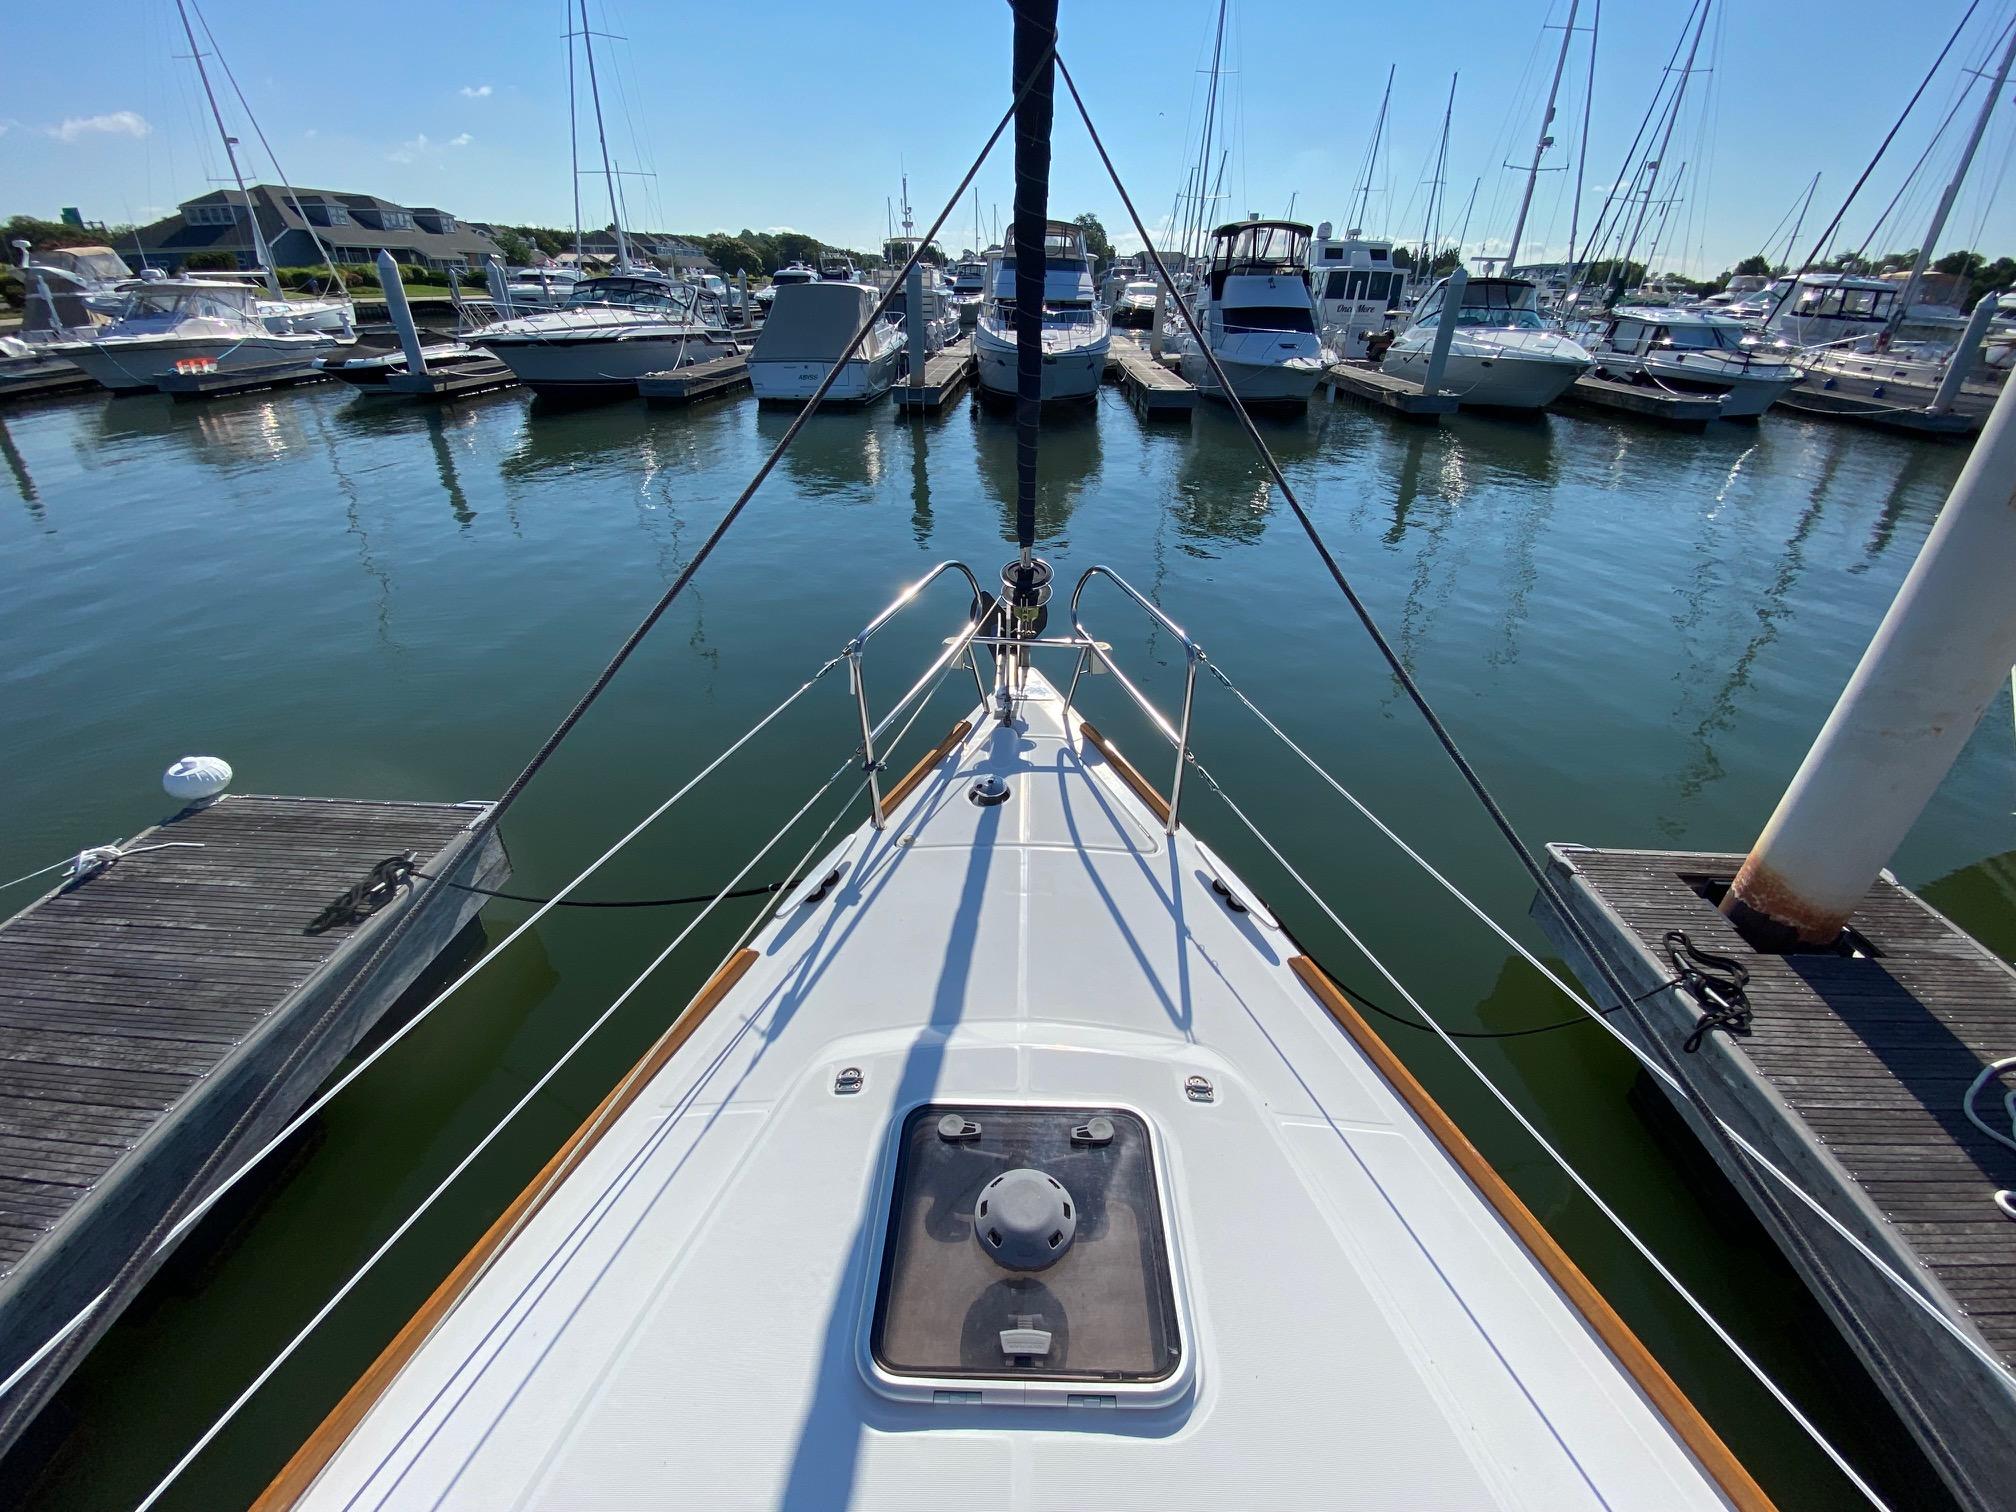 Soakit Yacht Brokers of Annapolis